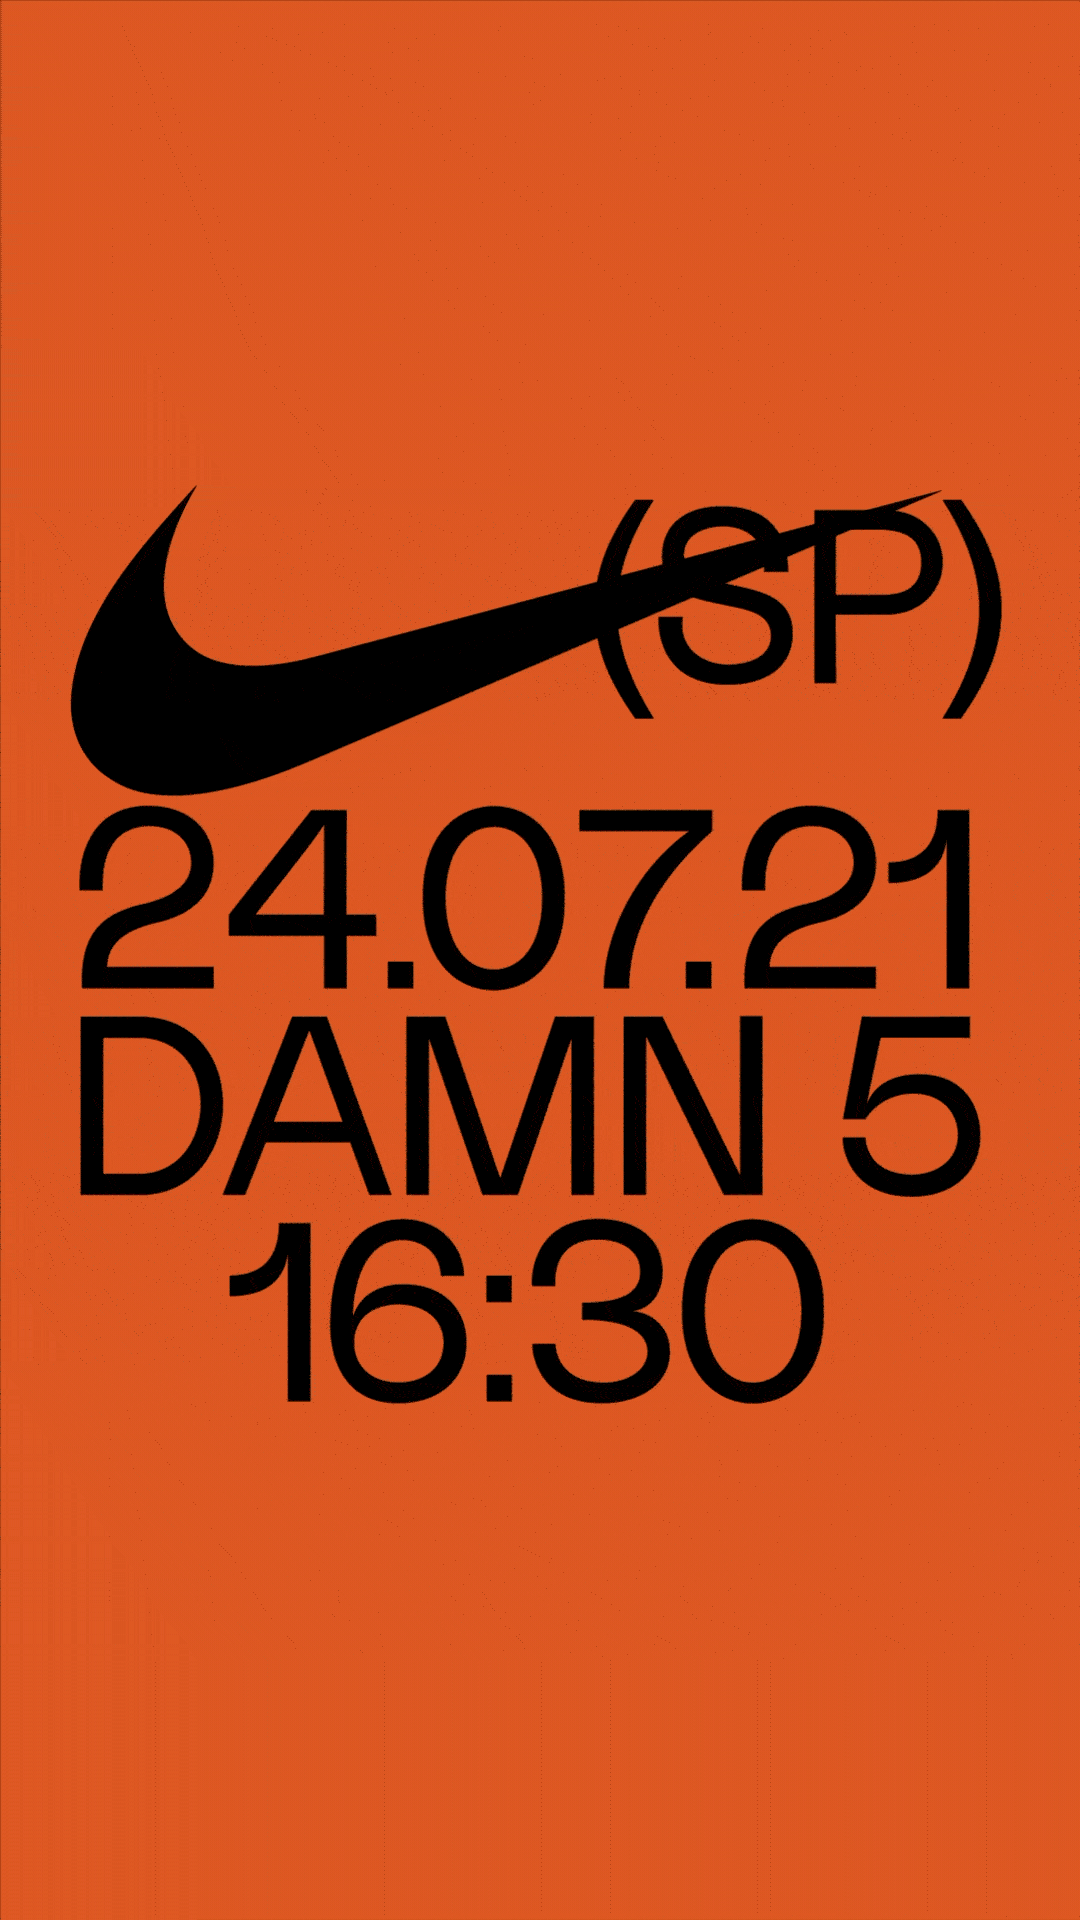 Nike | Poster | Orange | Motion | Typography